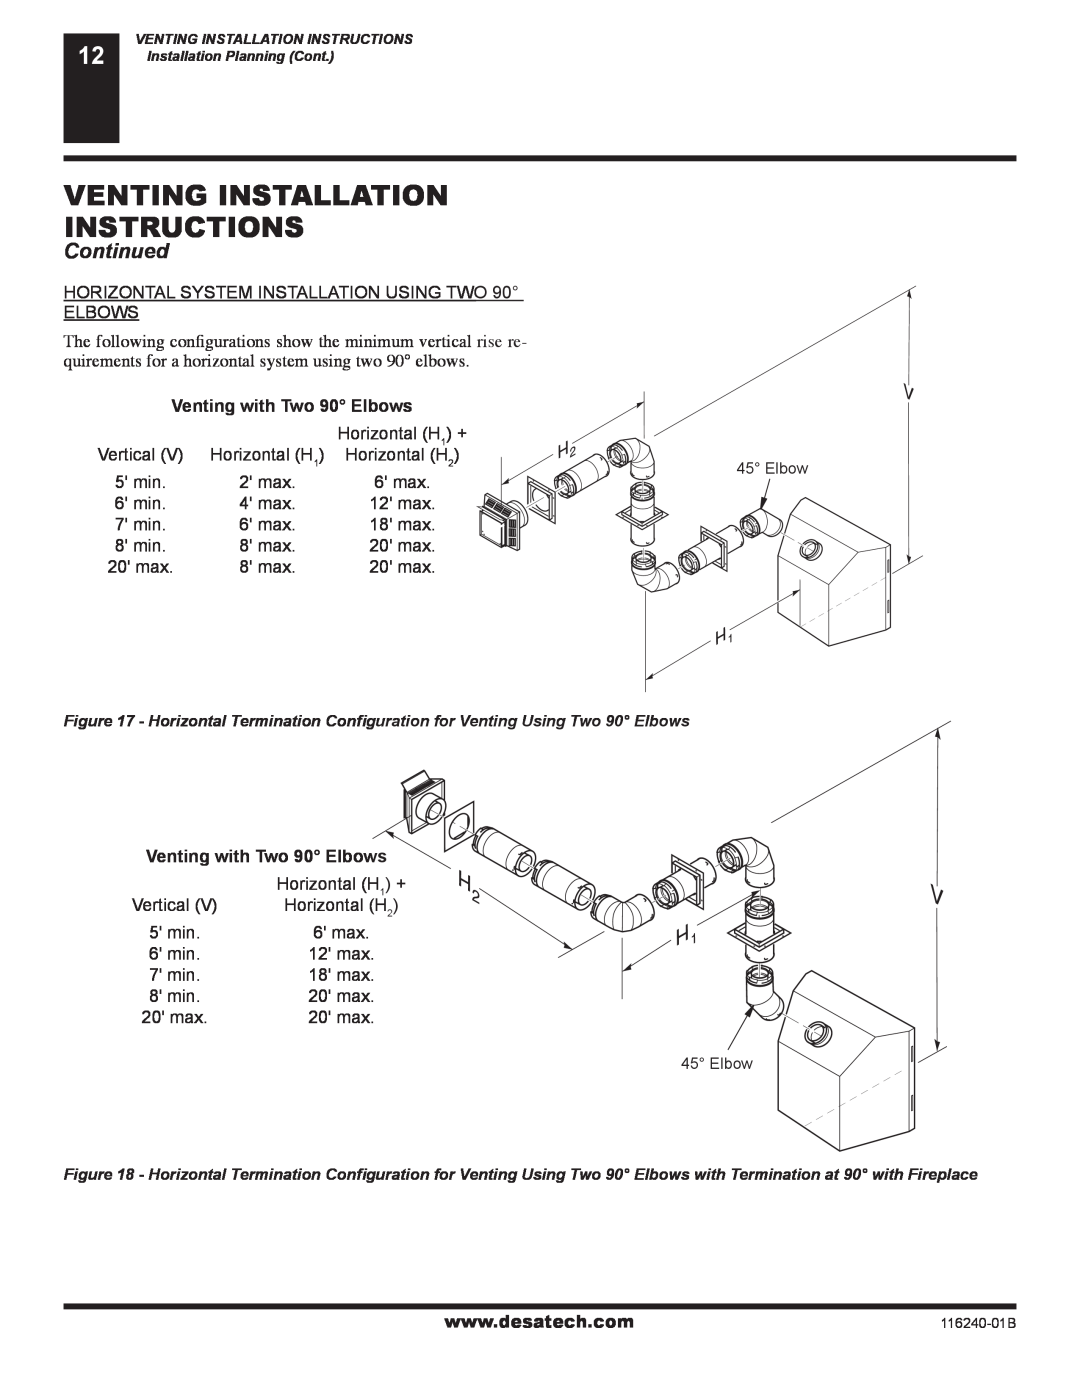 Desa (V)KC42NE SERIE installation manual Venting Installation Instructions, Continued, Venting with Two 90 Elbows 